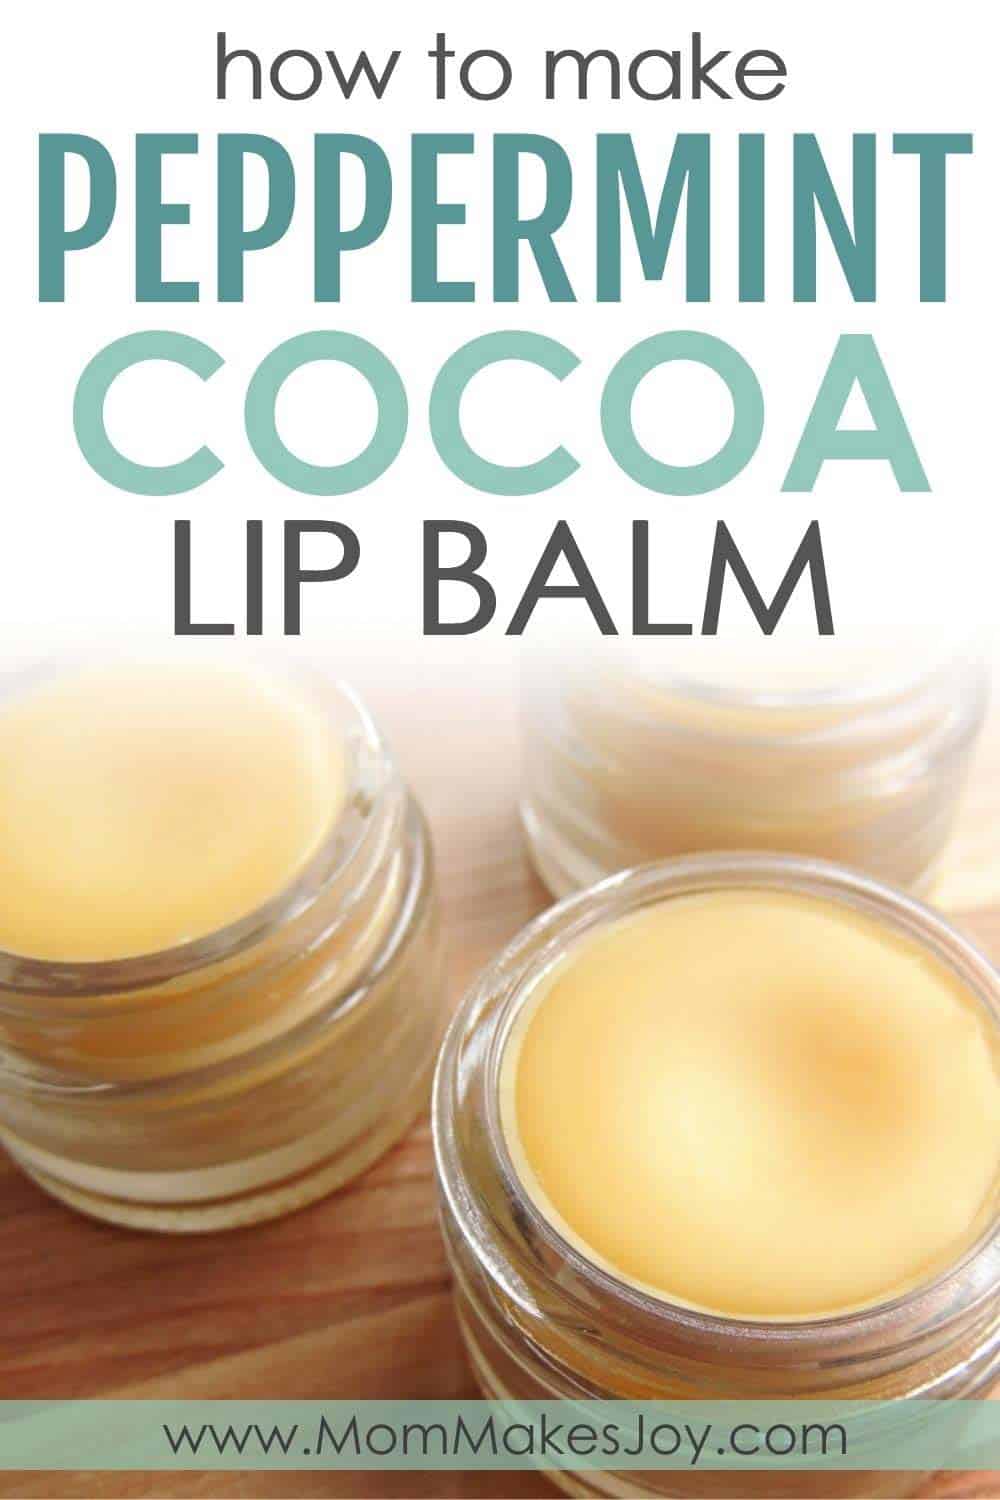 How to make homemade peppermint cocoa lip balm